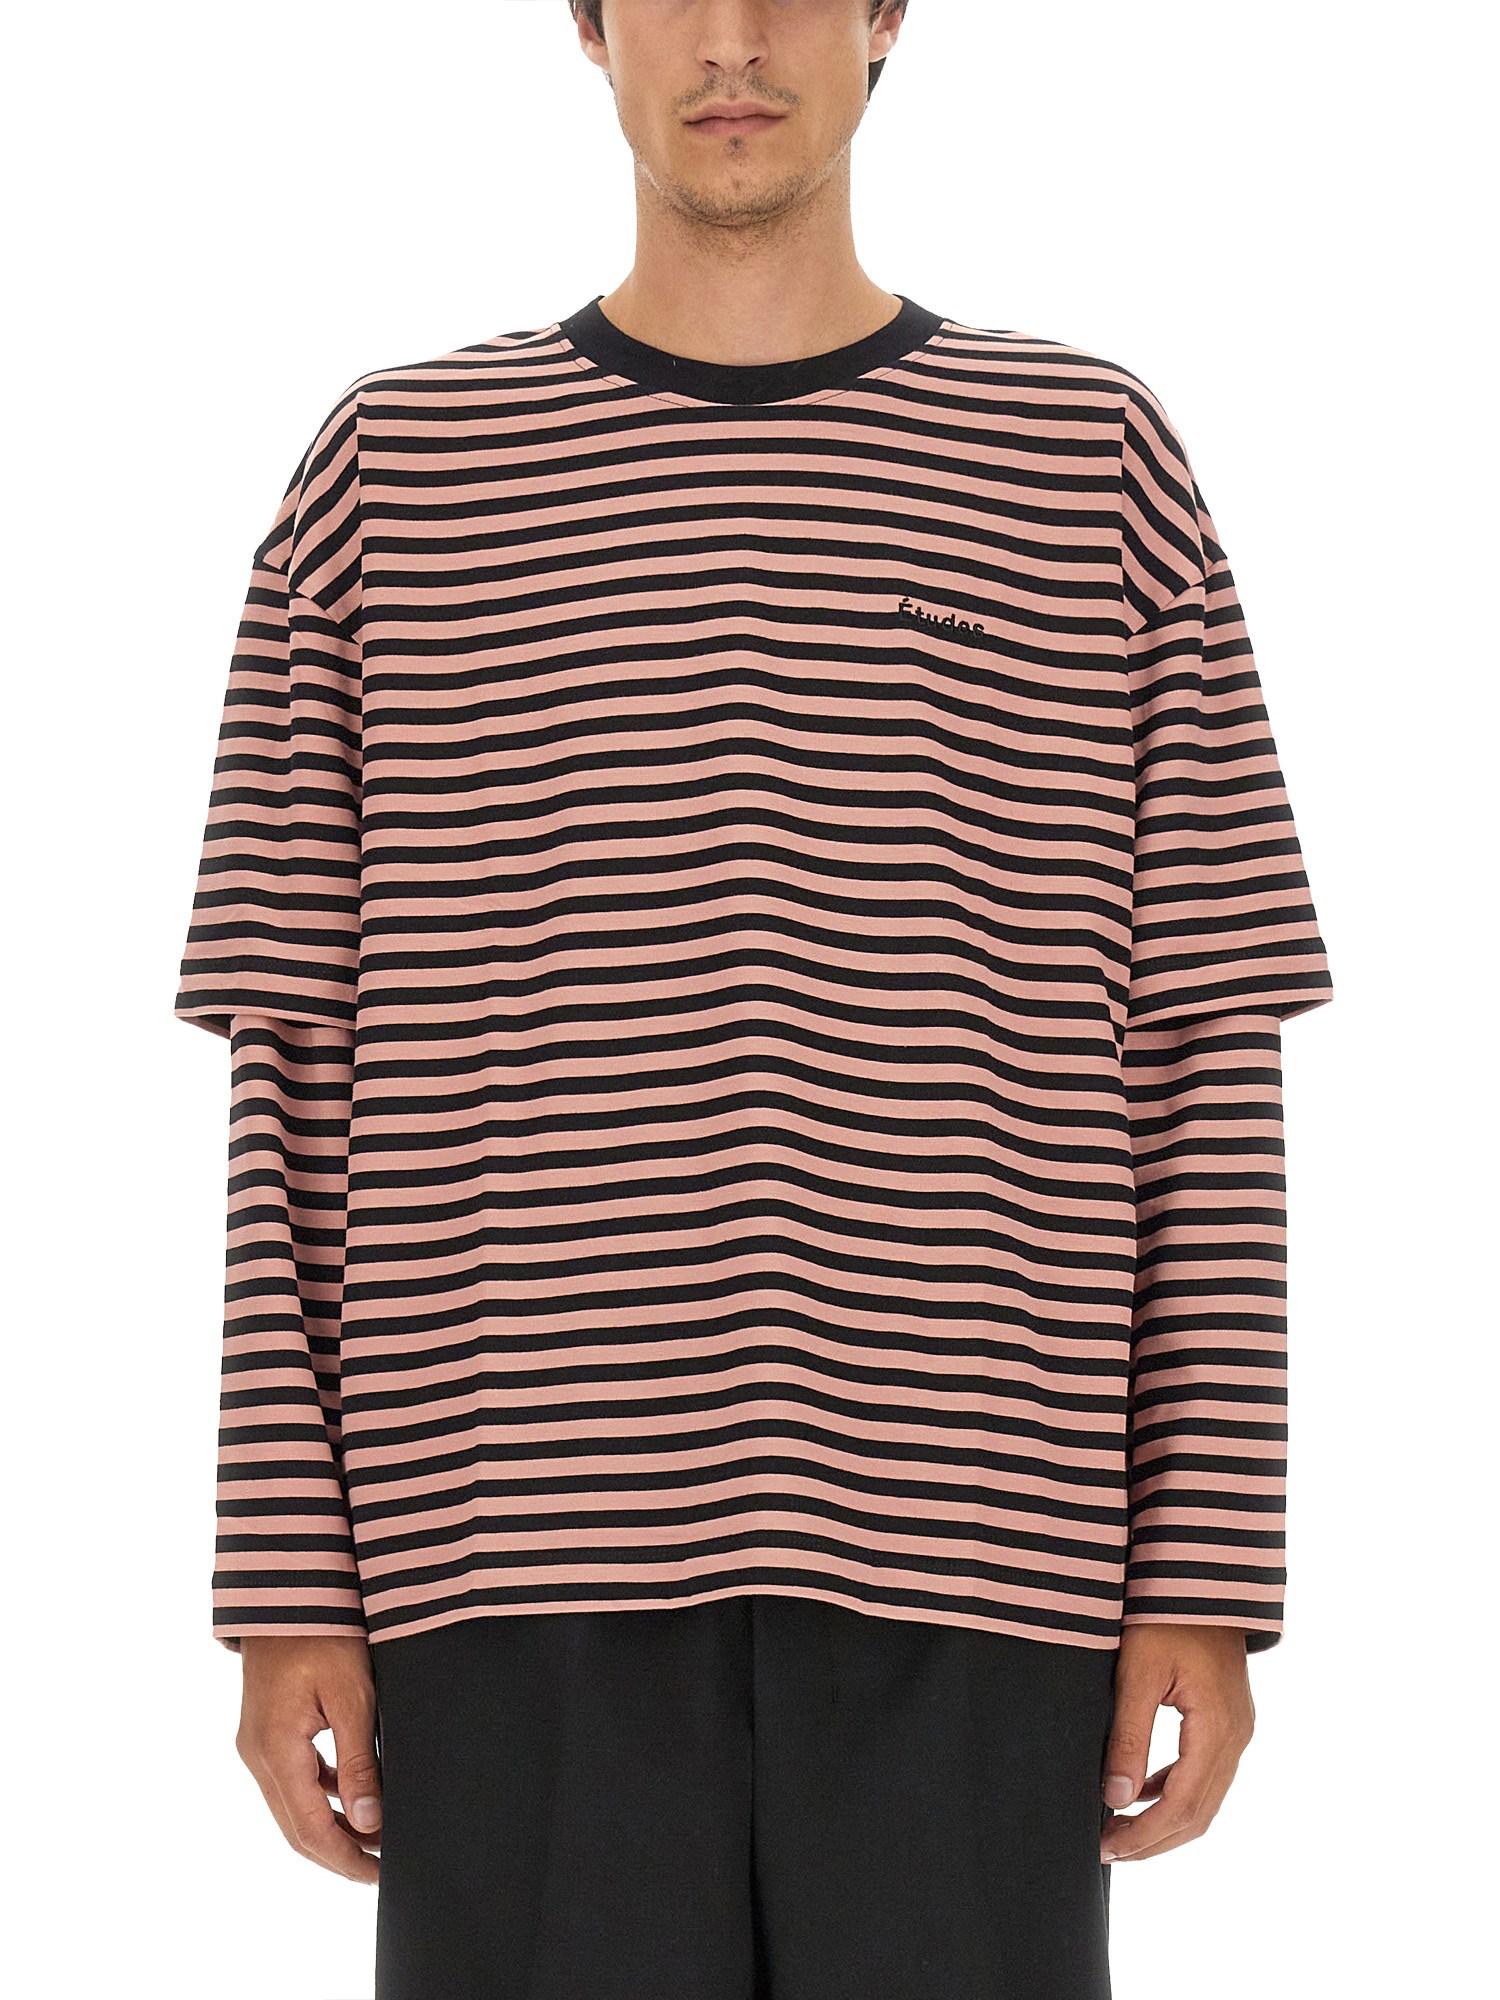 Ã©tudes t-shirt with stripe pattern